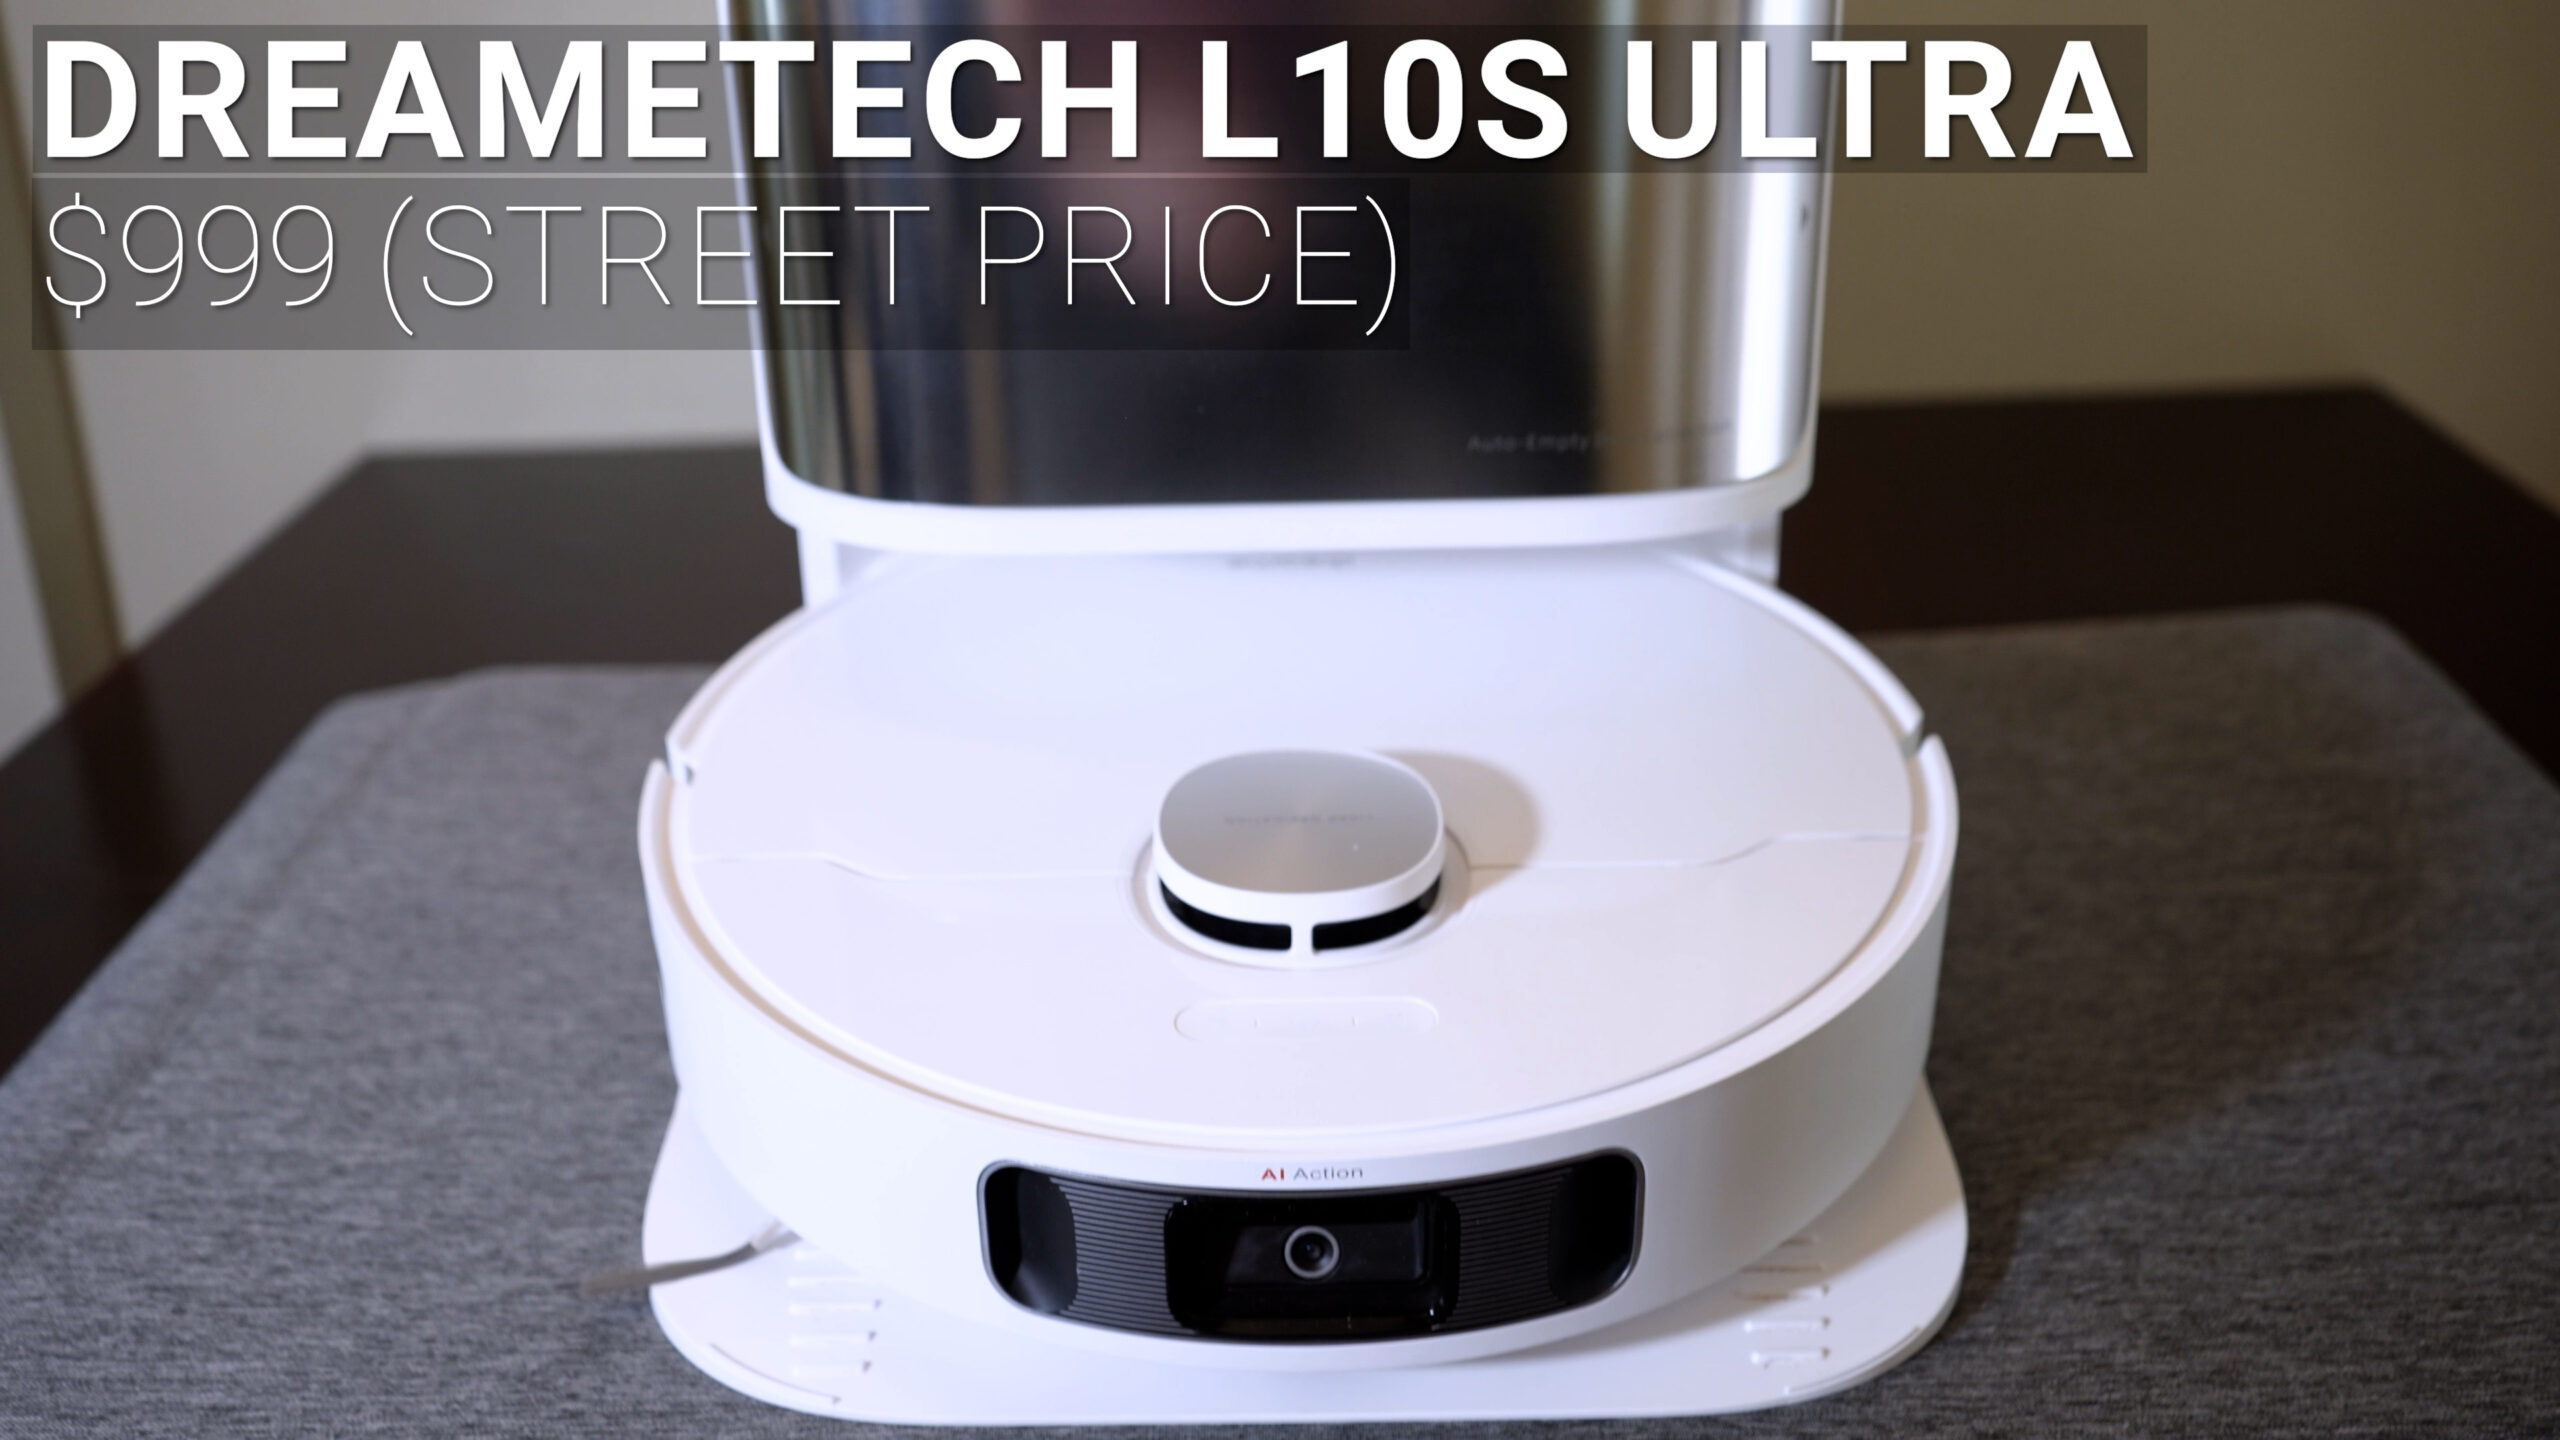  Dreametech L10s Ultra Robot Vacuum and Mop Combo